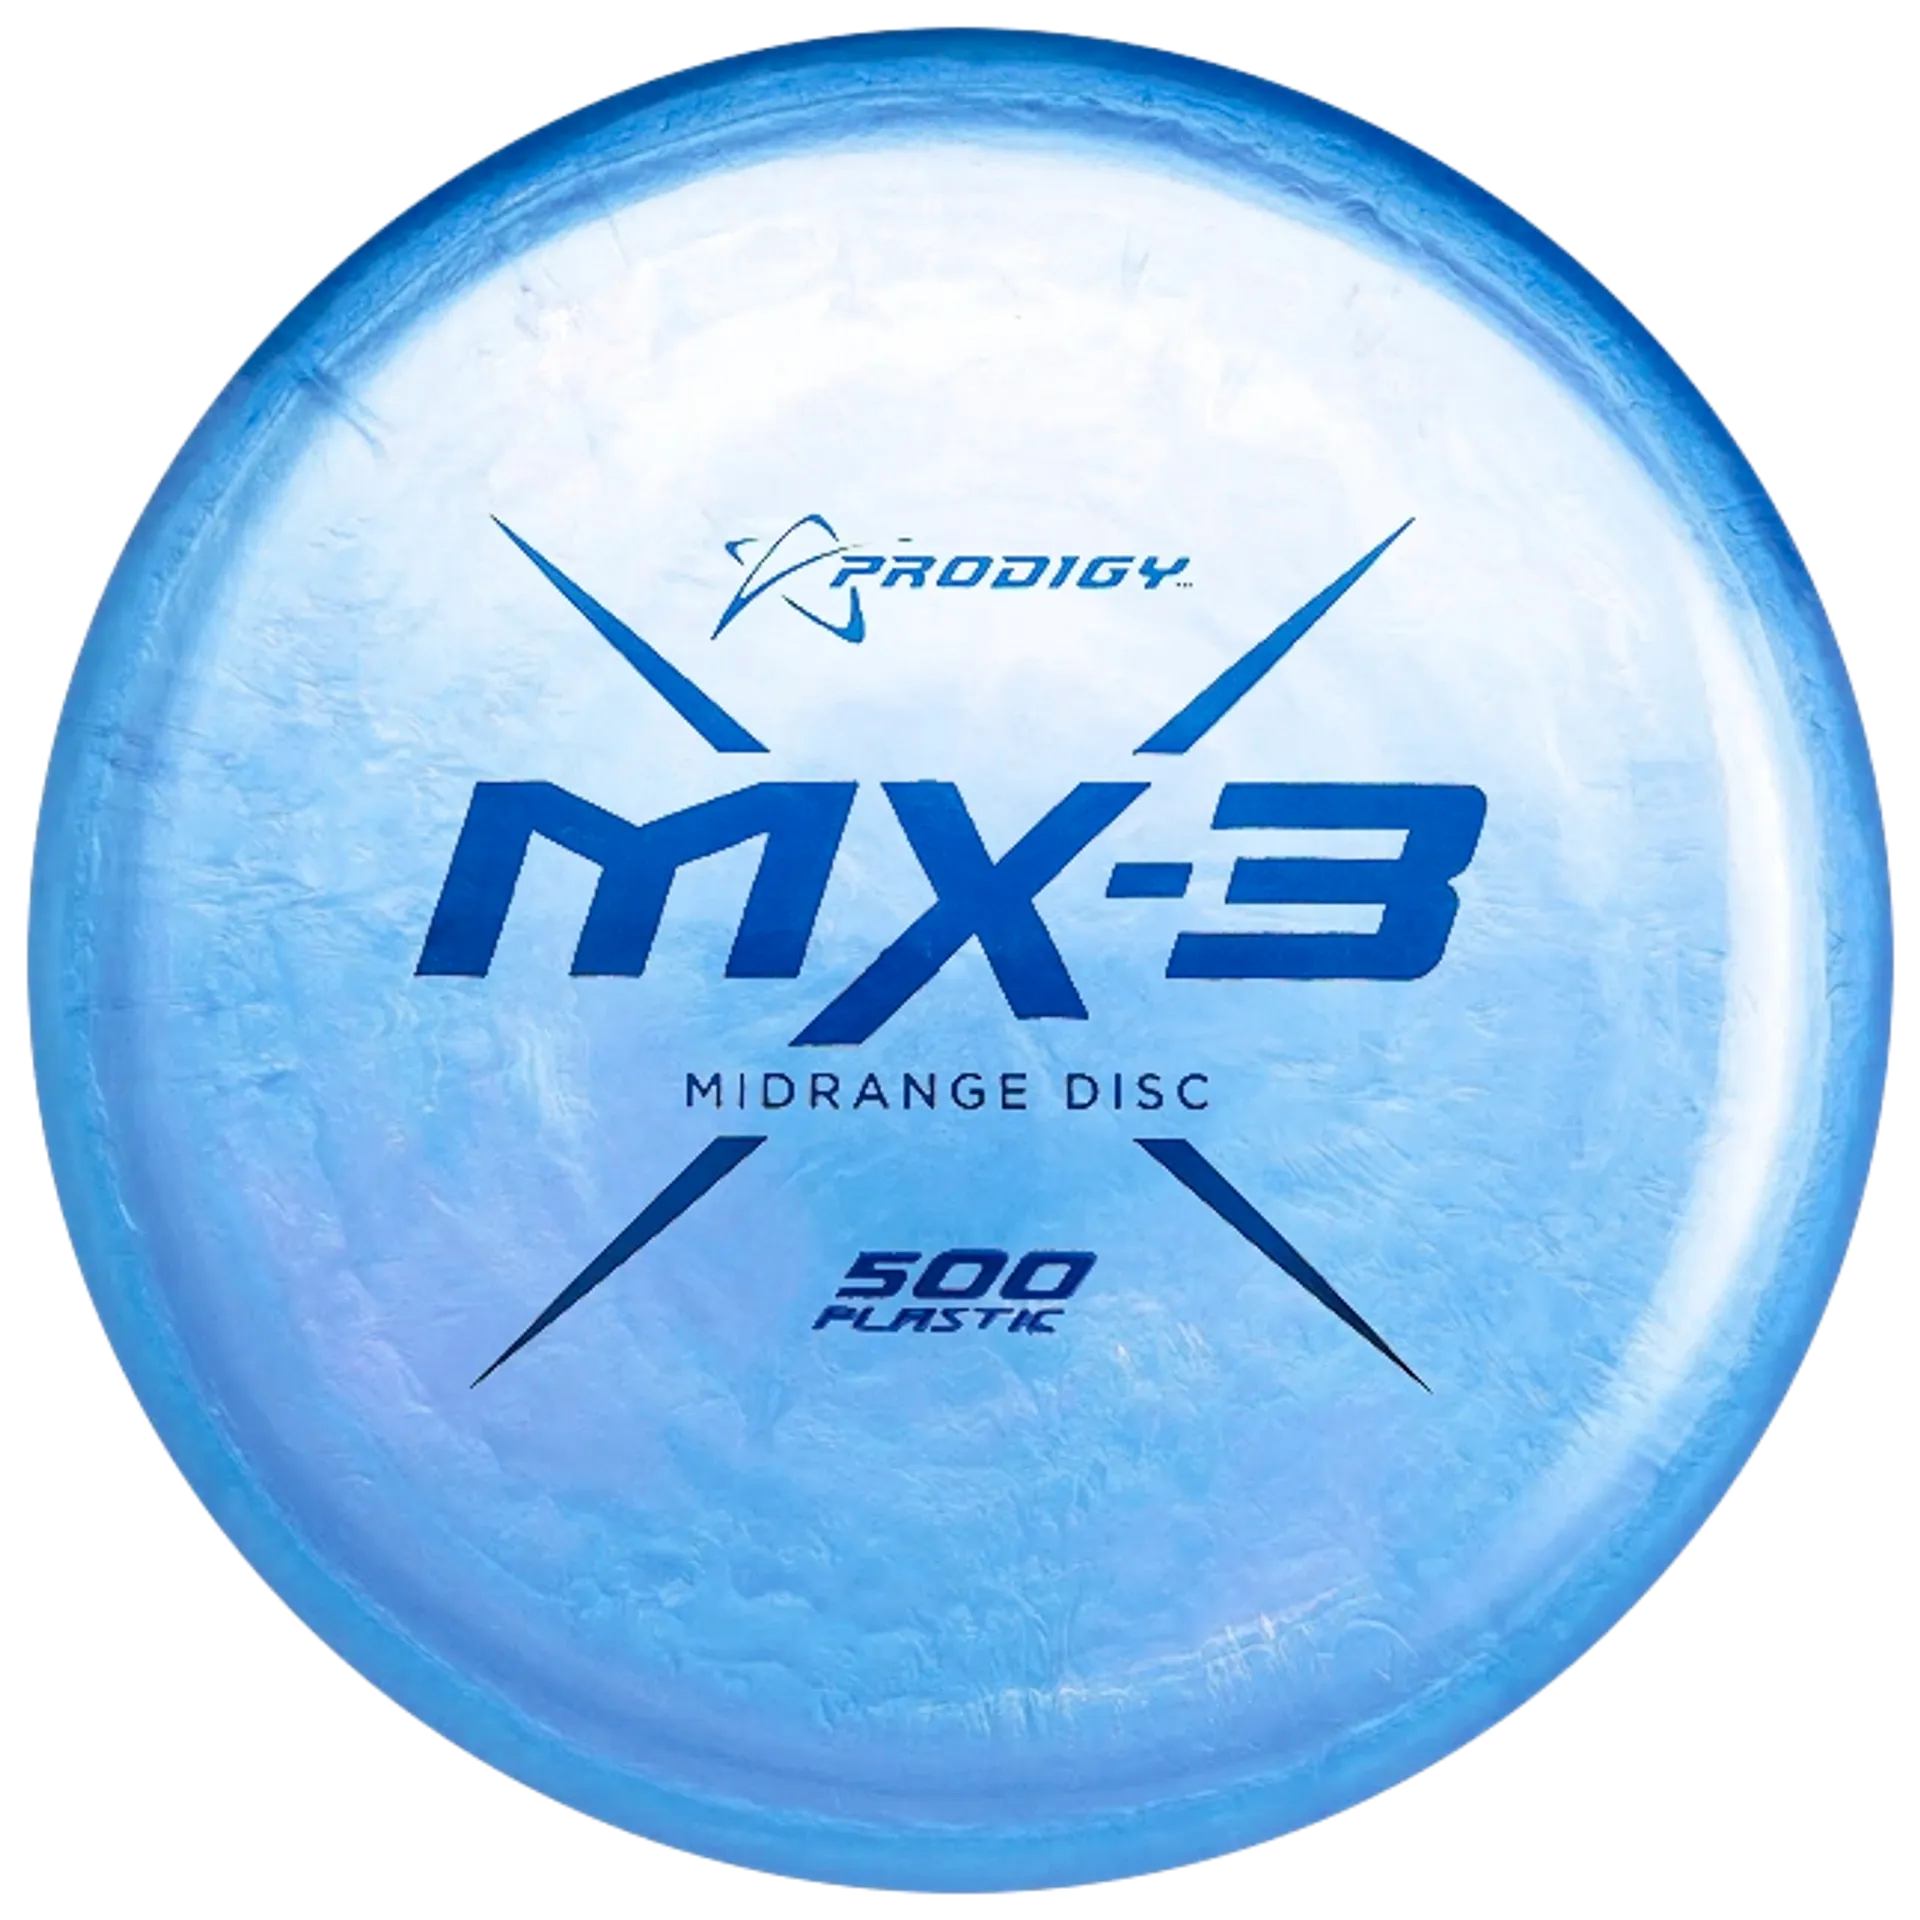 Progidy Disc midari MX-3 500